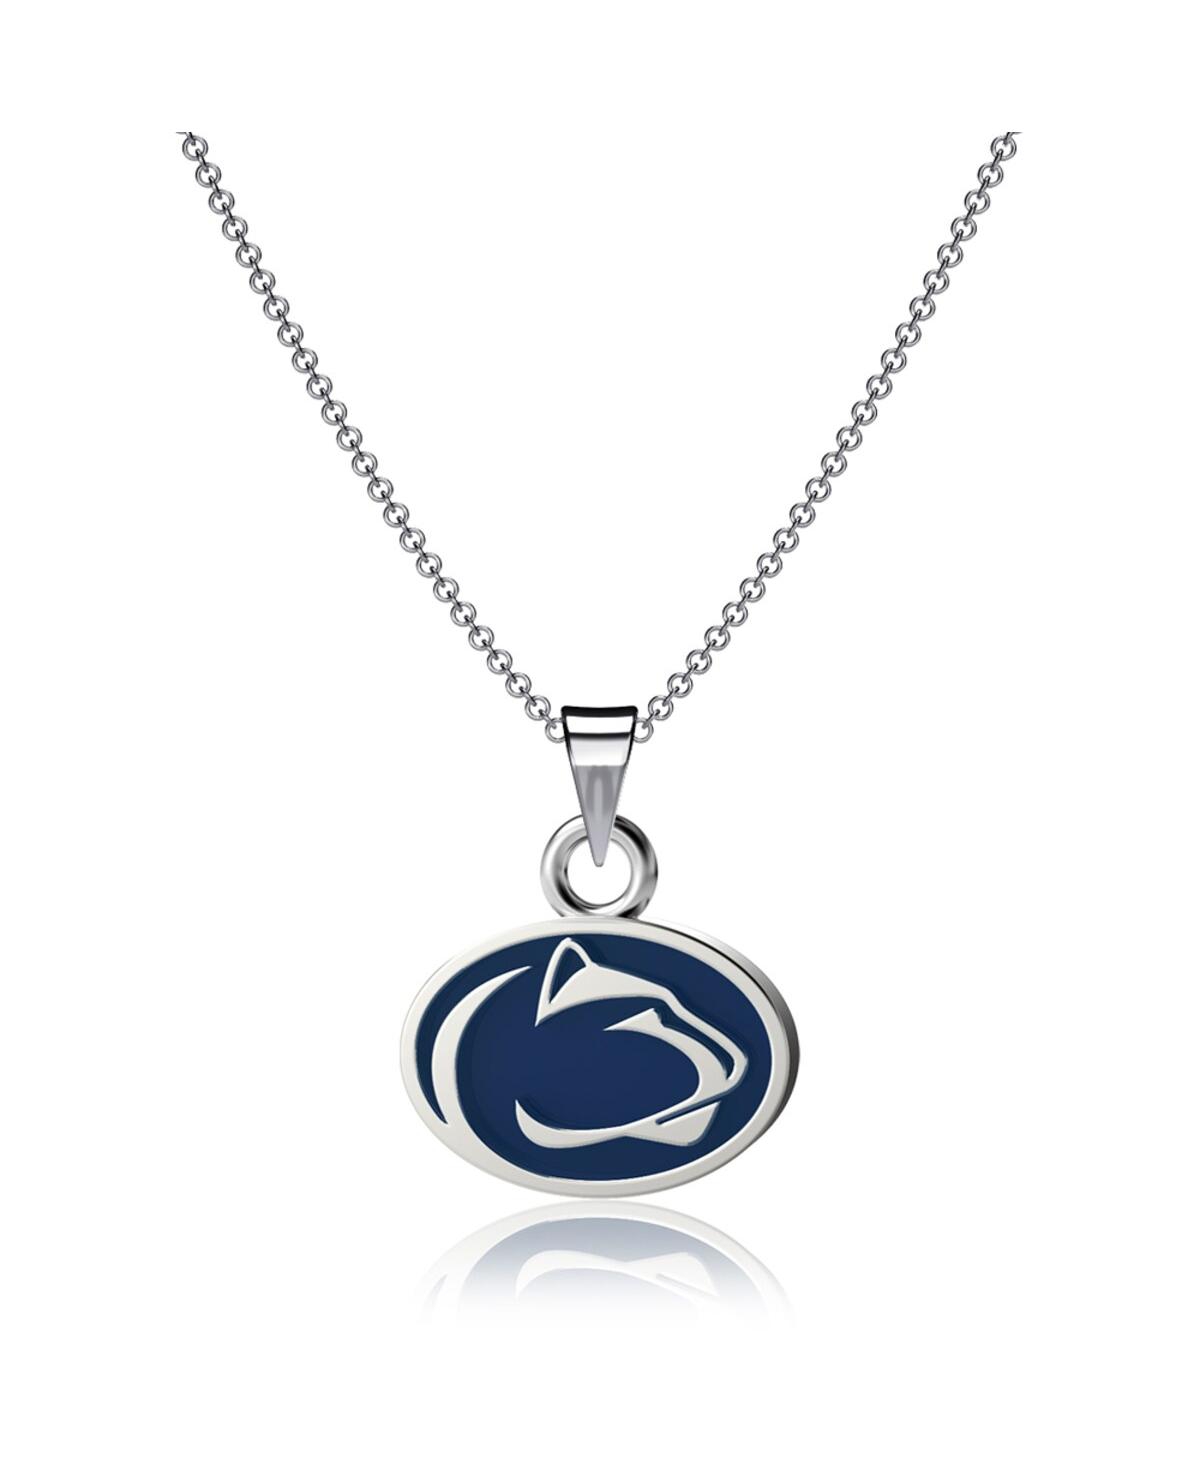 Women's Dayna Designs Penn State Nittany Lions Enamel Pendant Necklace - Navy, Silver